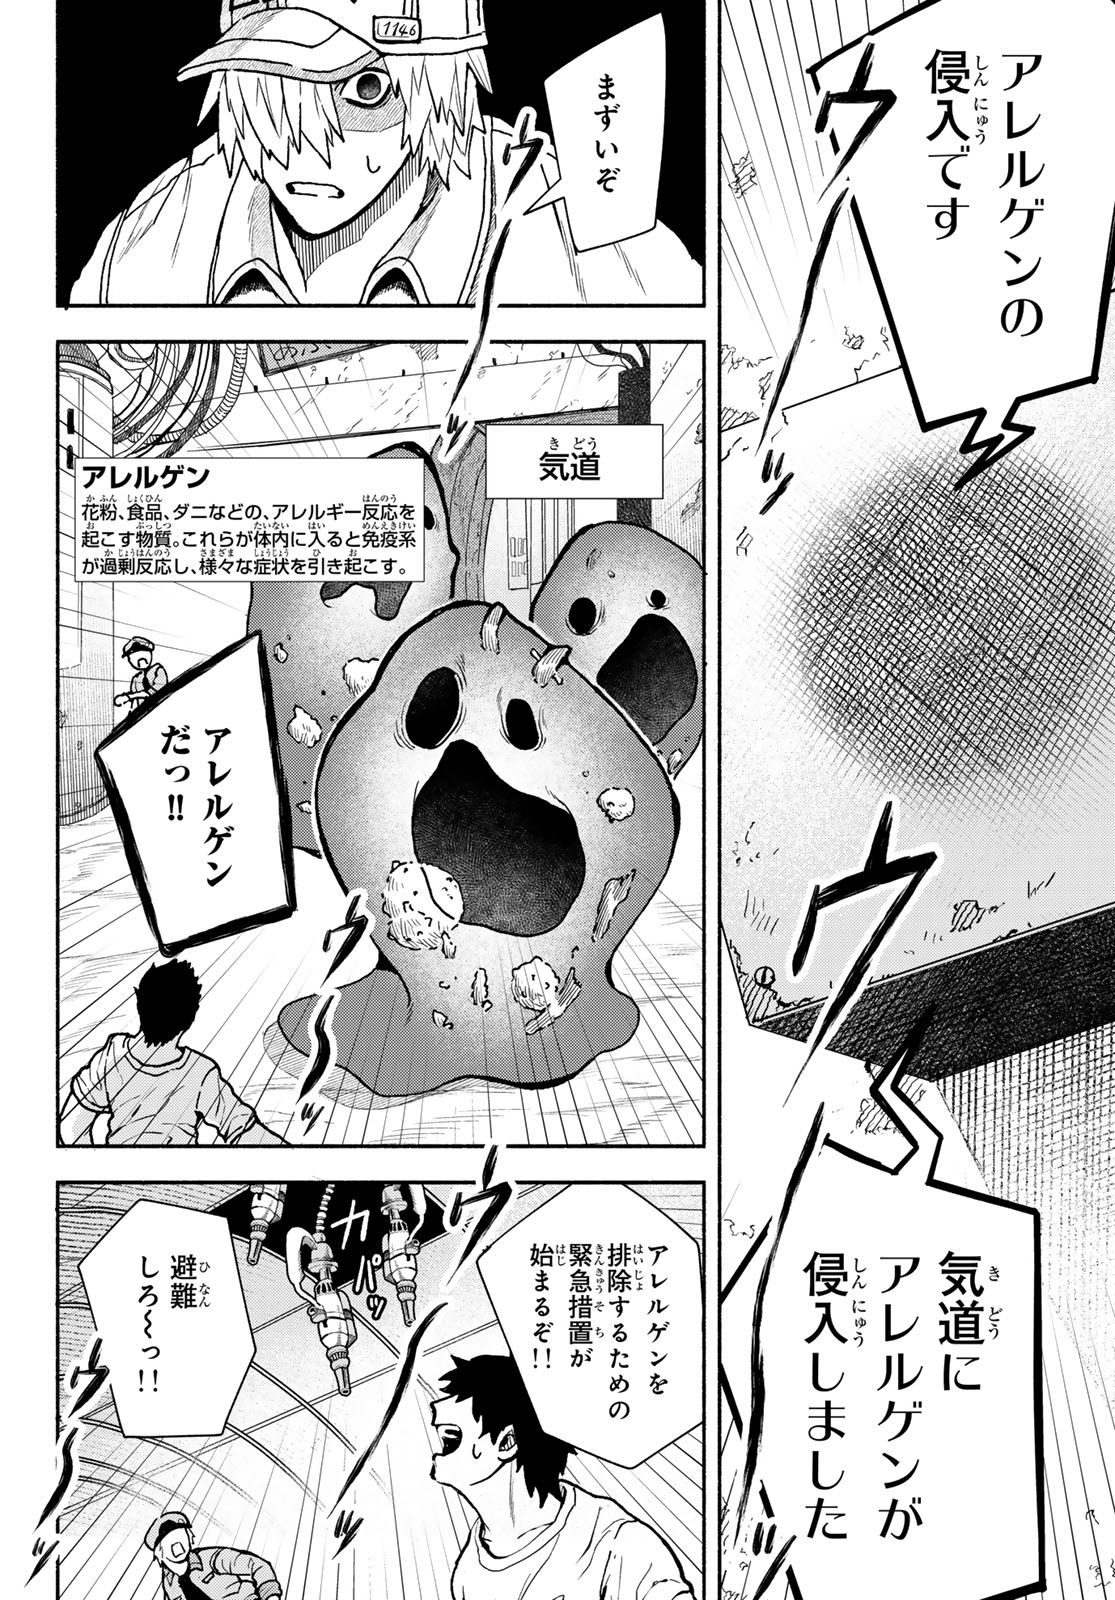 Hataraku Saibou Okusuri - Chapter 11 - Page 6